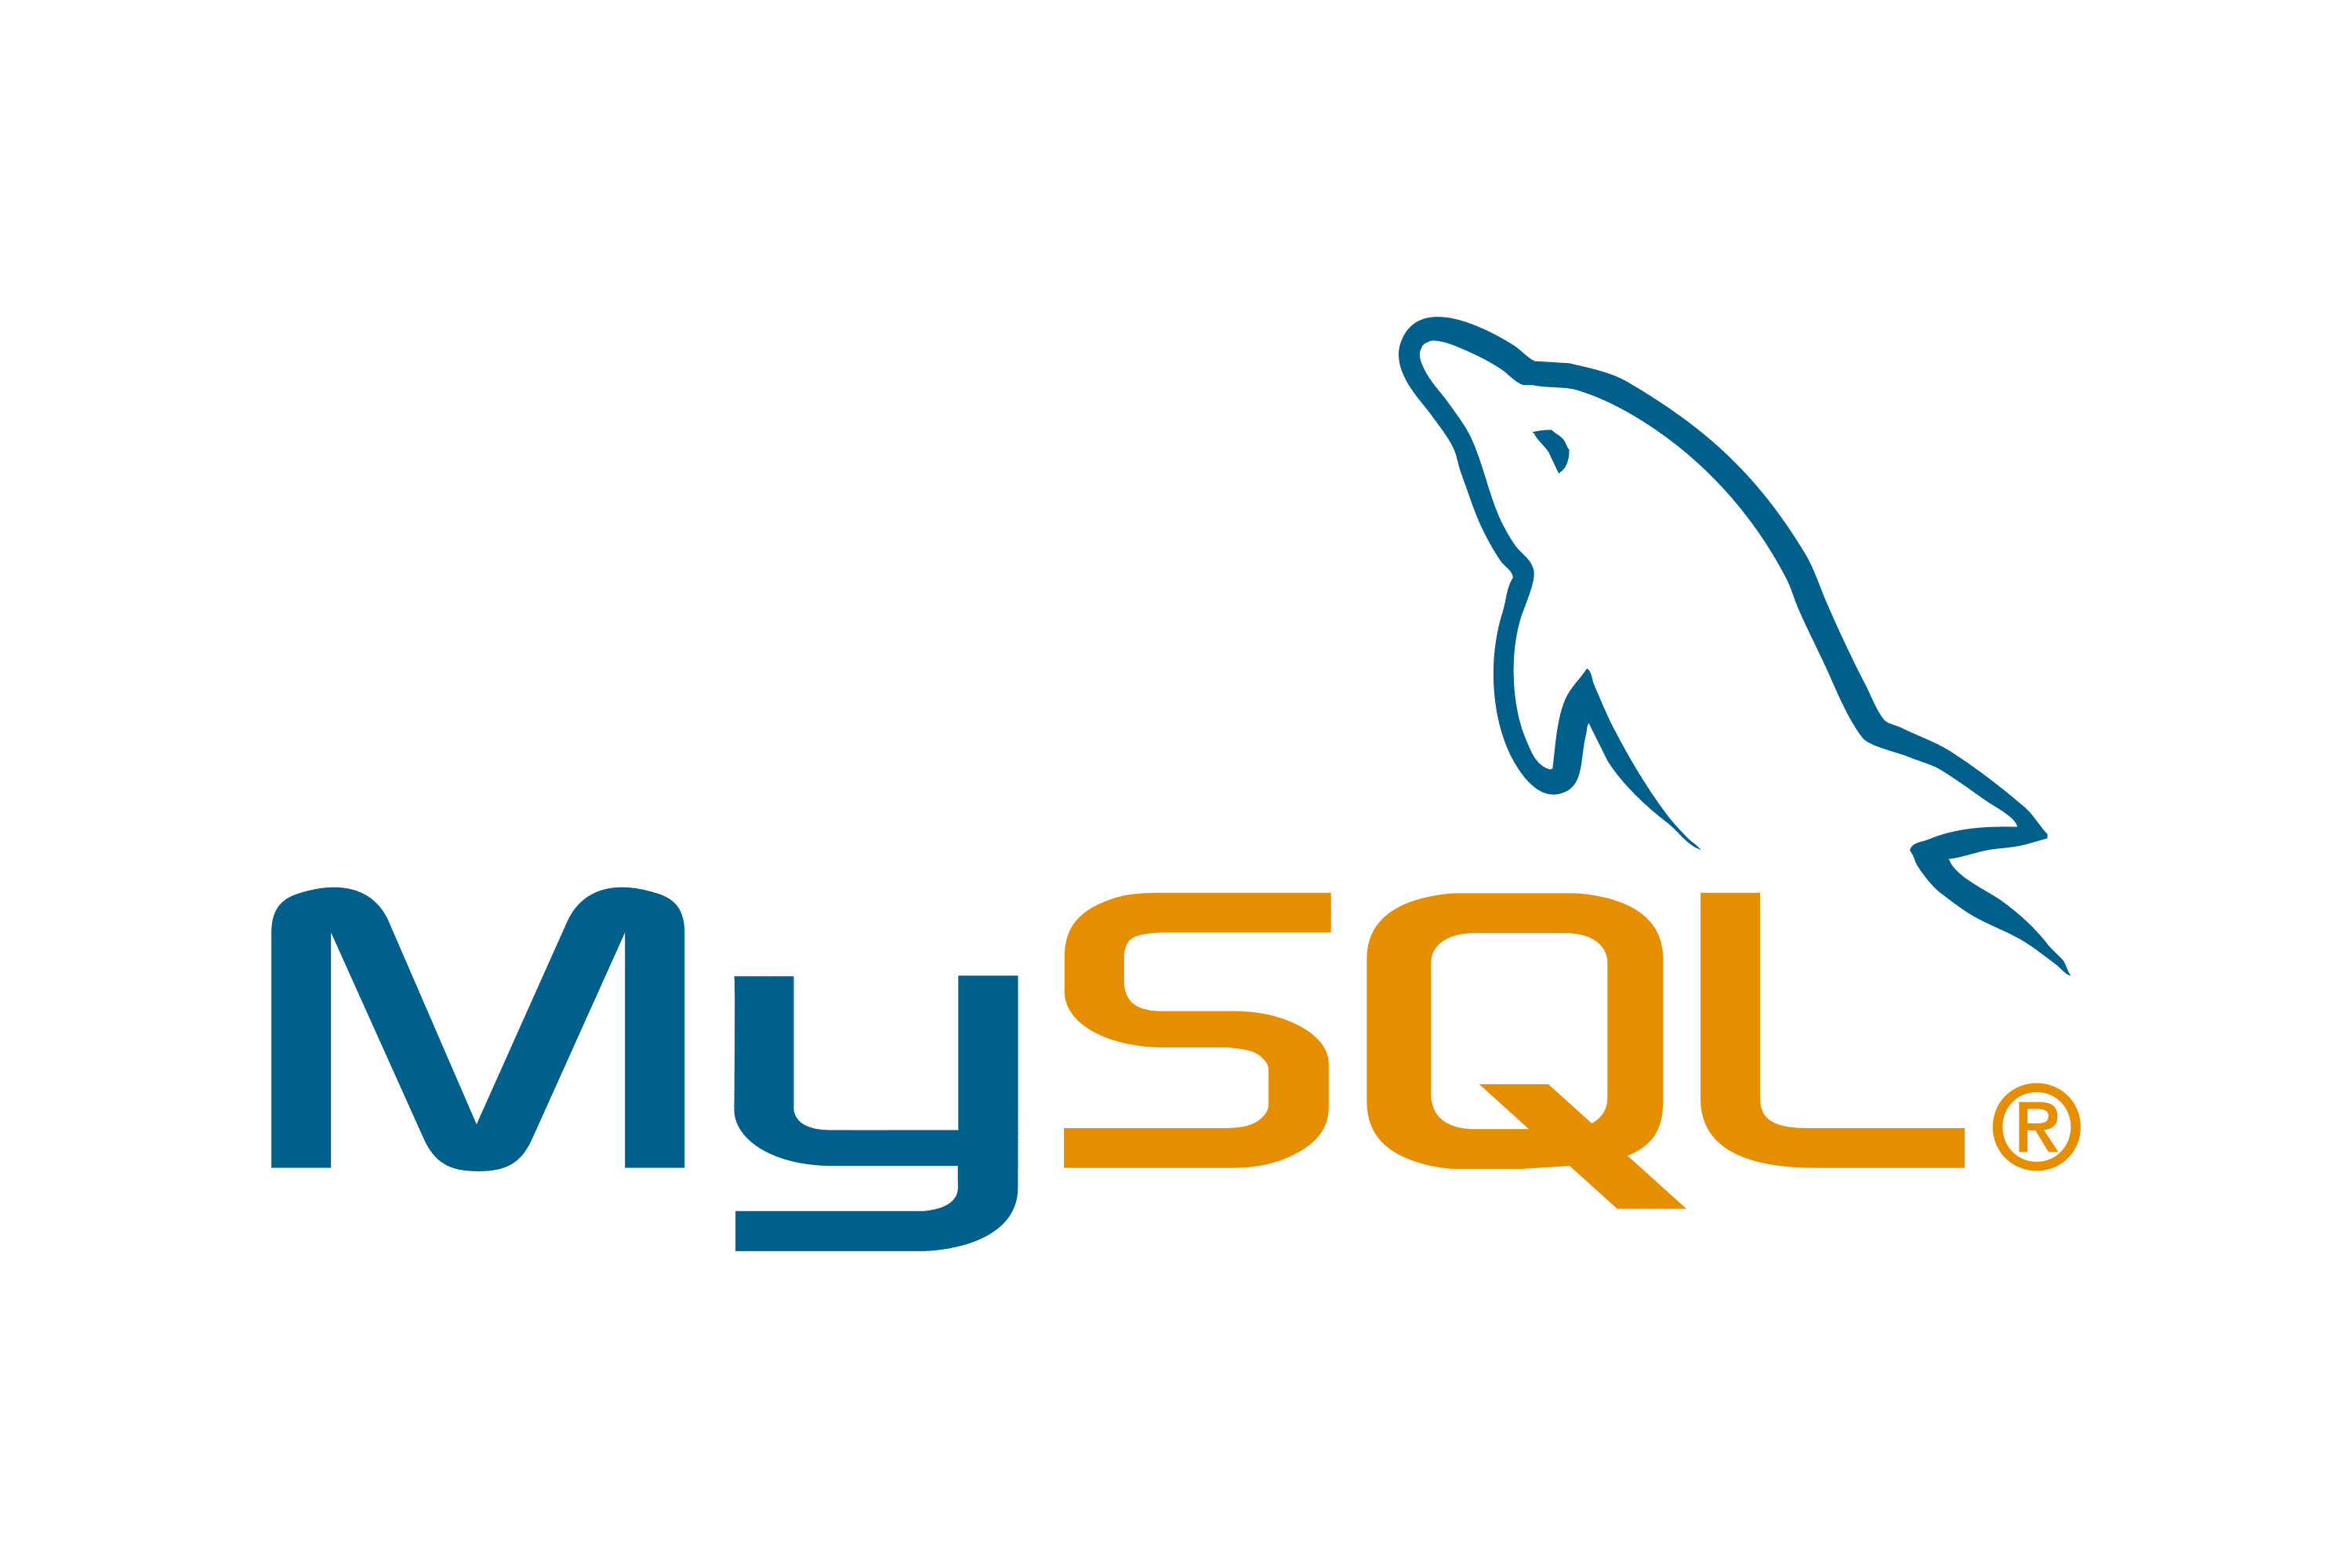 MySQL-logoet, der viser teksten under en skråstillet, stiliseret blå delfinkrop.